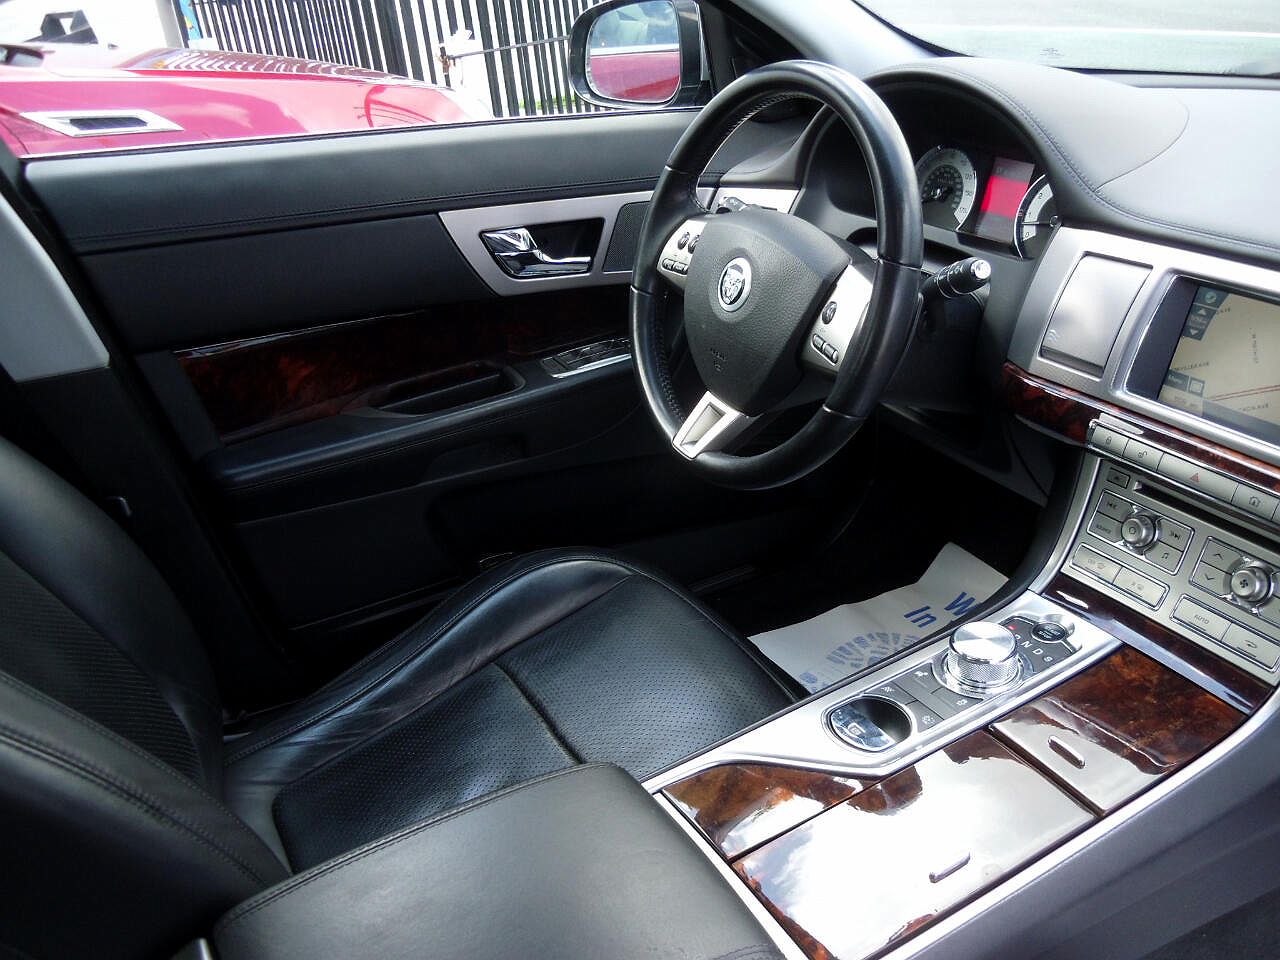 2010 Jaguar XF Premium image 21